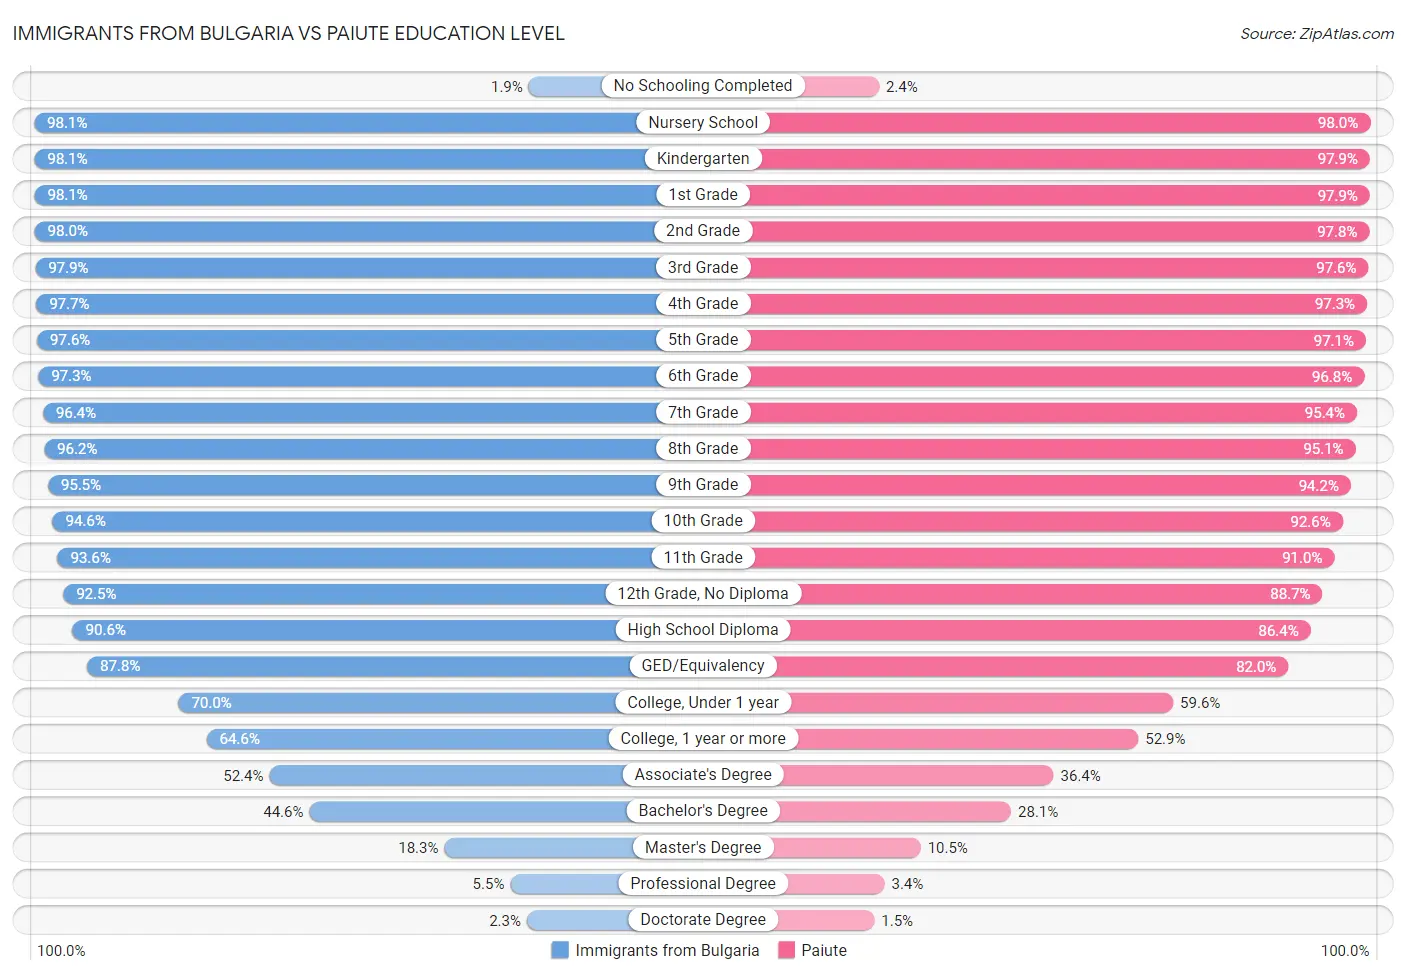 Immigrants from Bulgaria vs Paiute Education Level